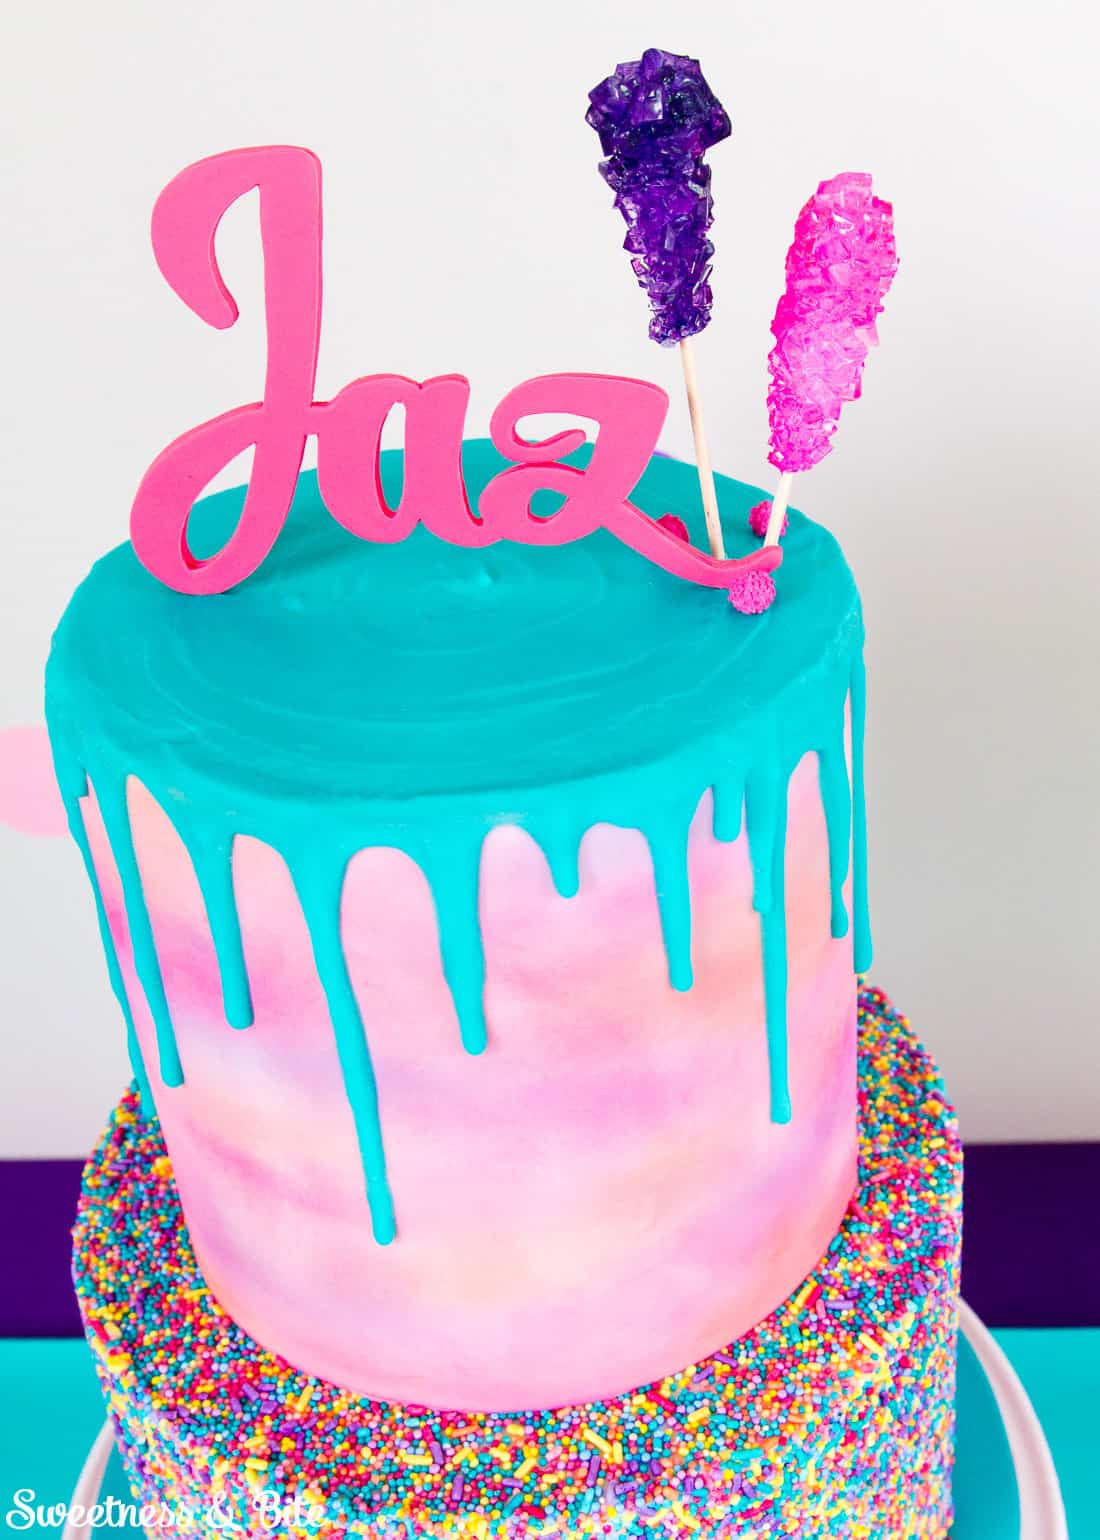 Simple Watercolour Cake Tutorial by Sweetness & Bite